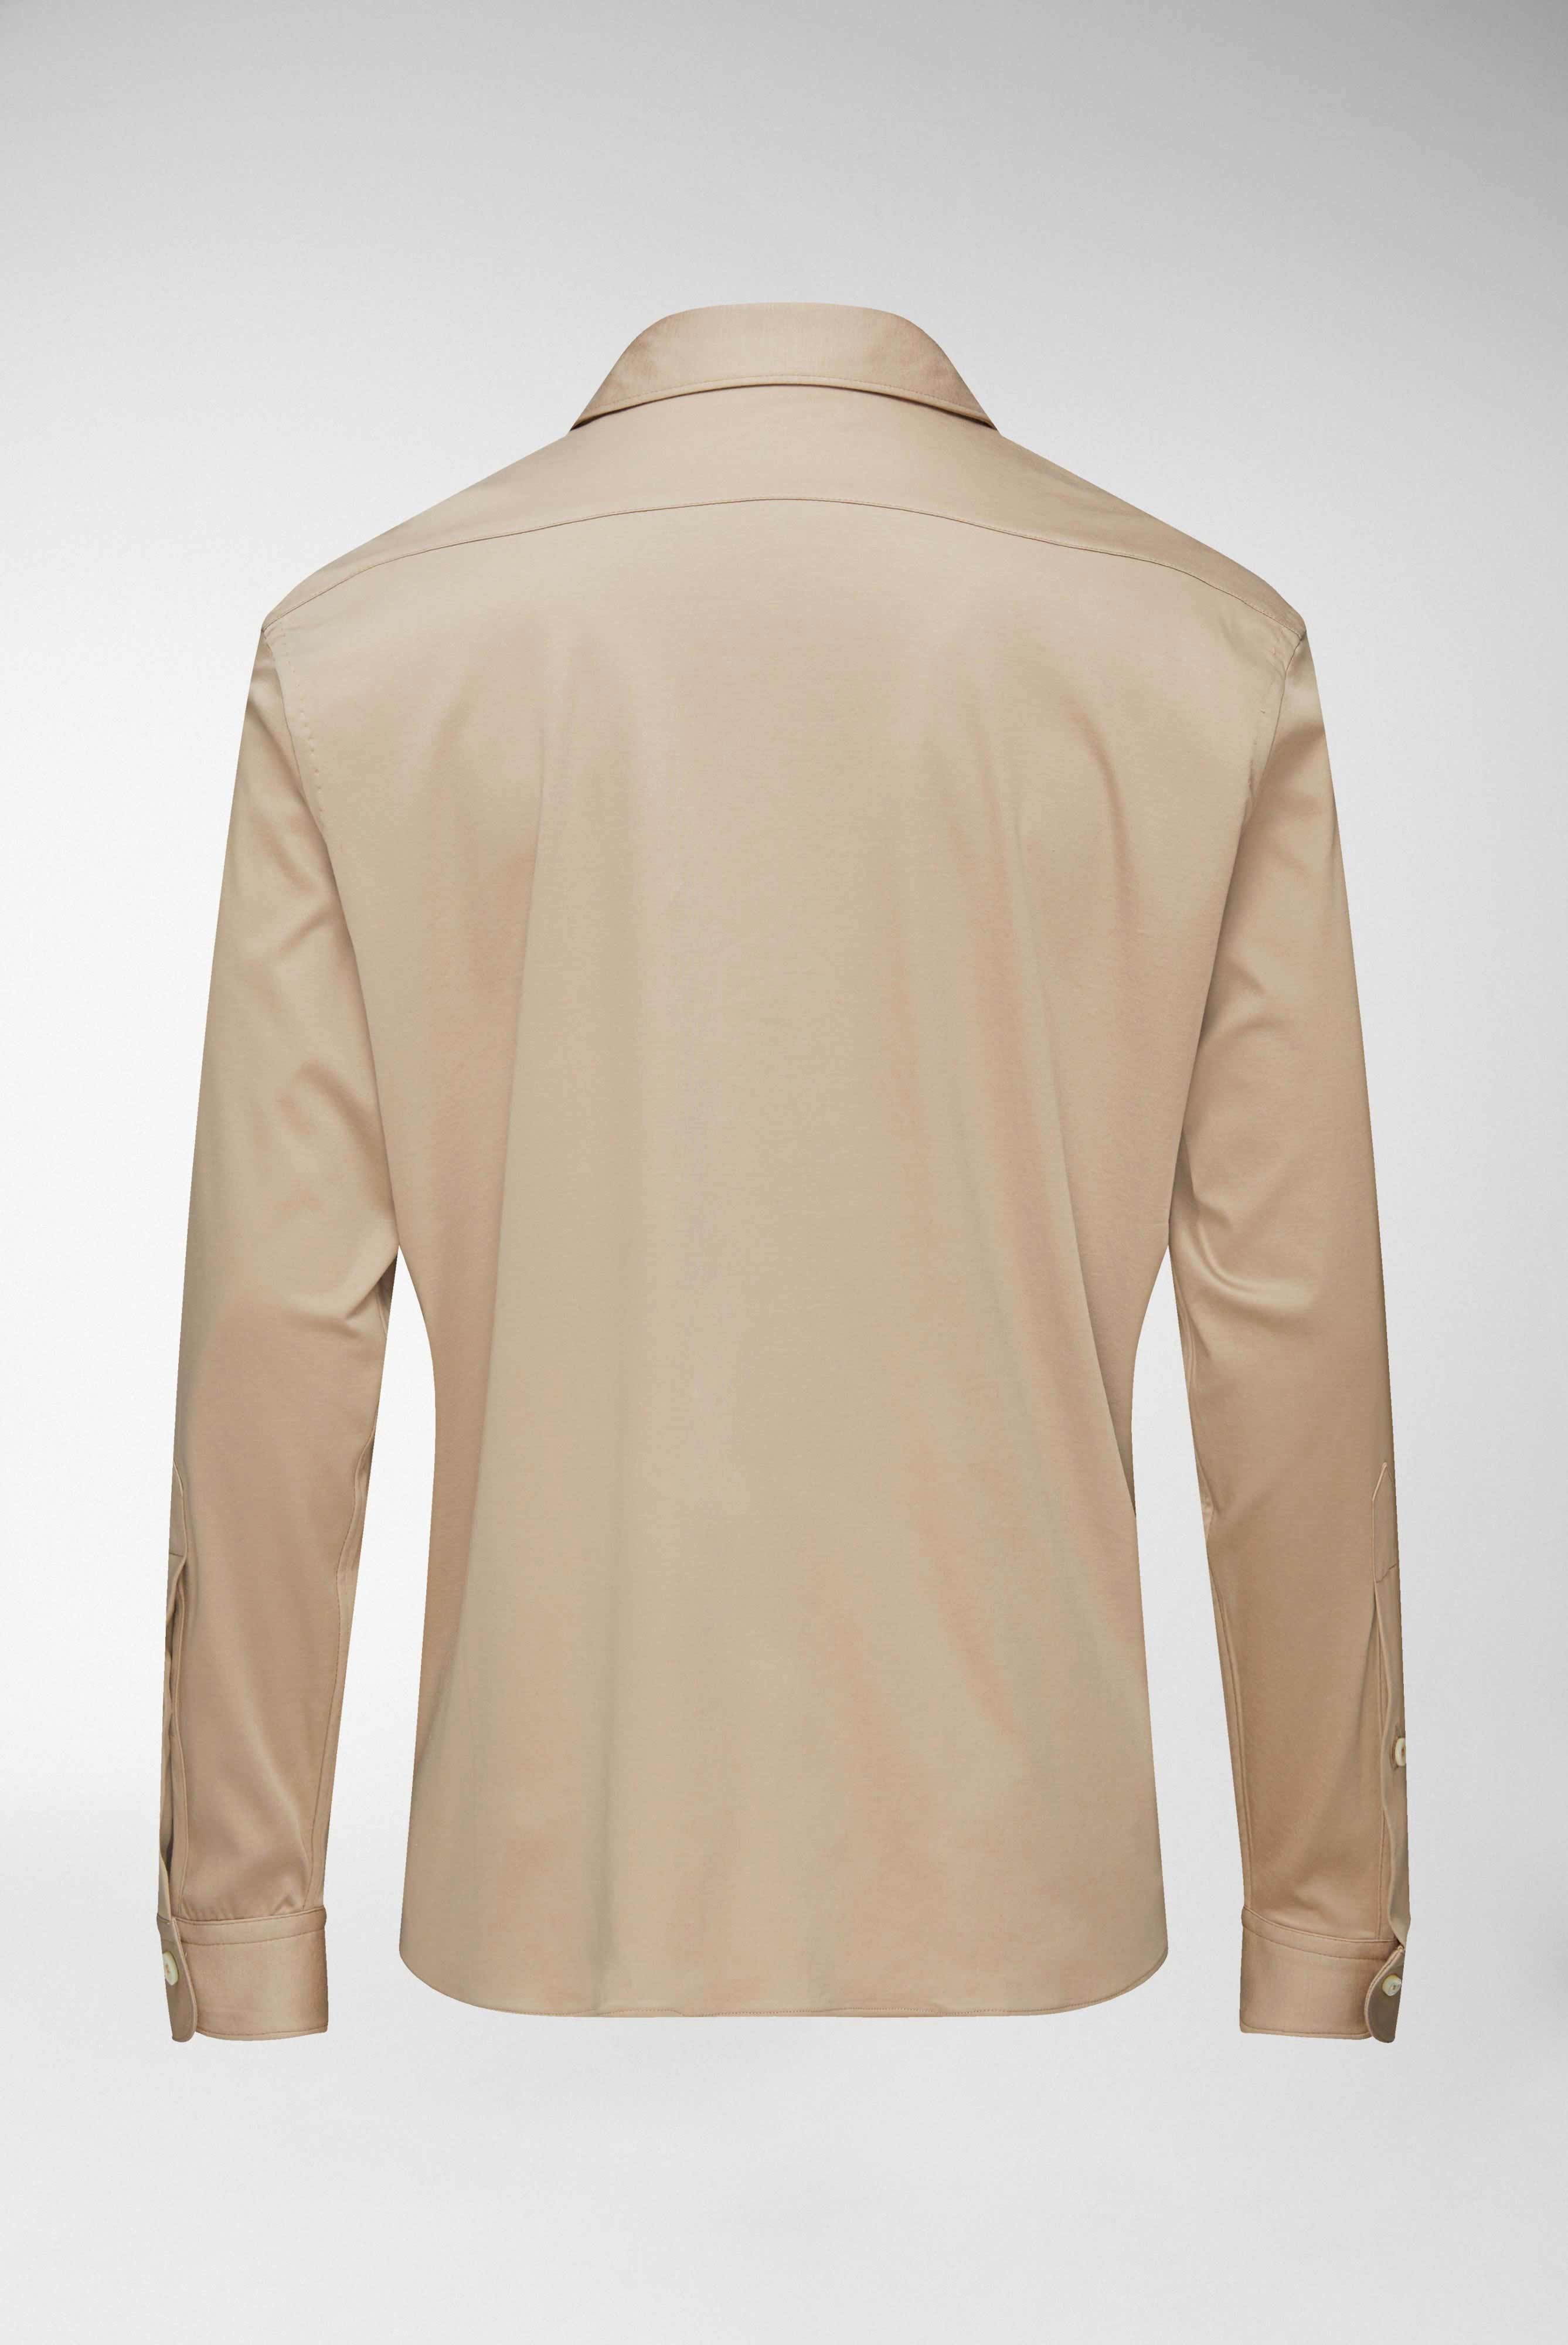 Casual Hemden+Jersey Hemd aus Schweizer Baumwolle Tailor Fit+20.1683.UC.180031.140.X3L